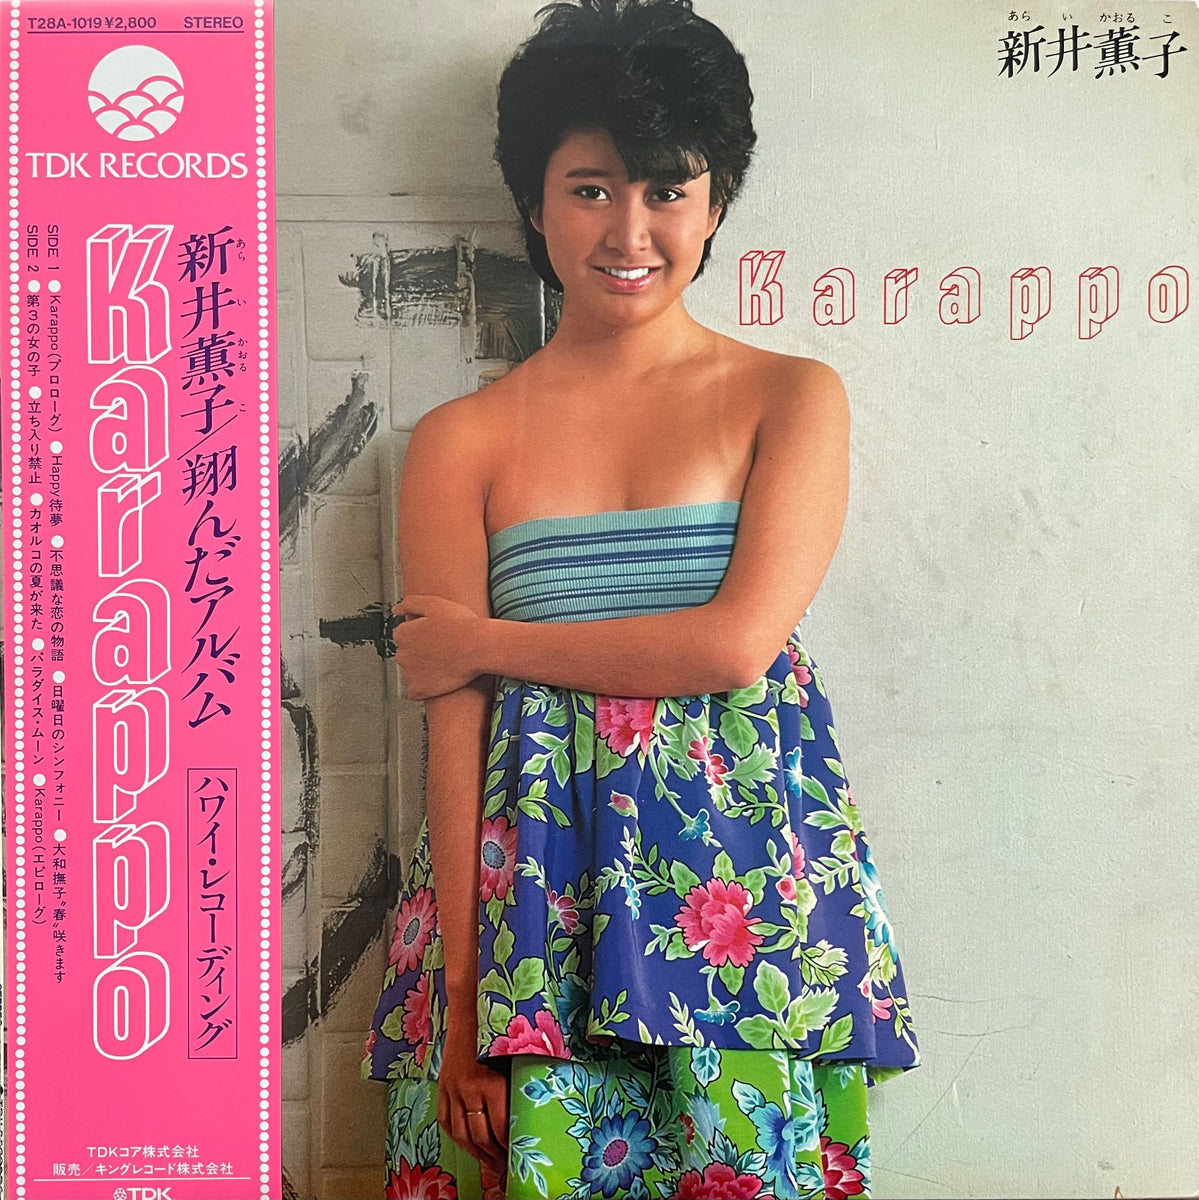 Kaoruko Arai u003d 新井薫子 - Karappo – Galapagos Records